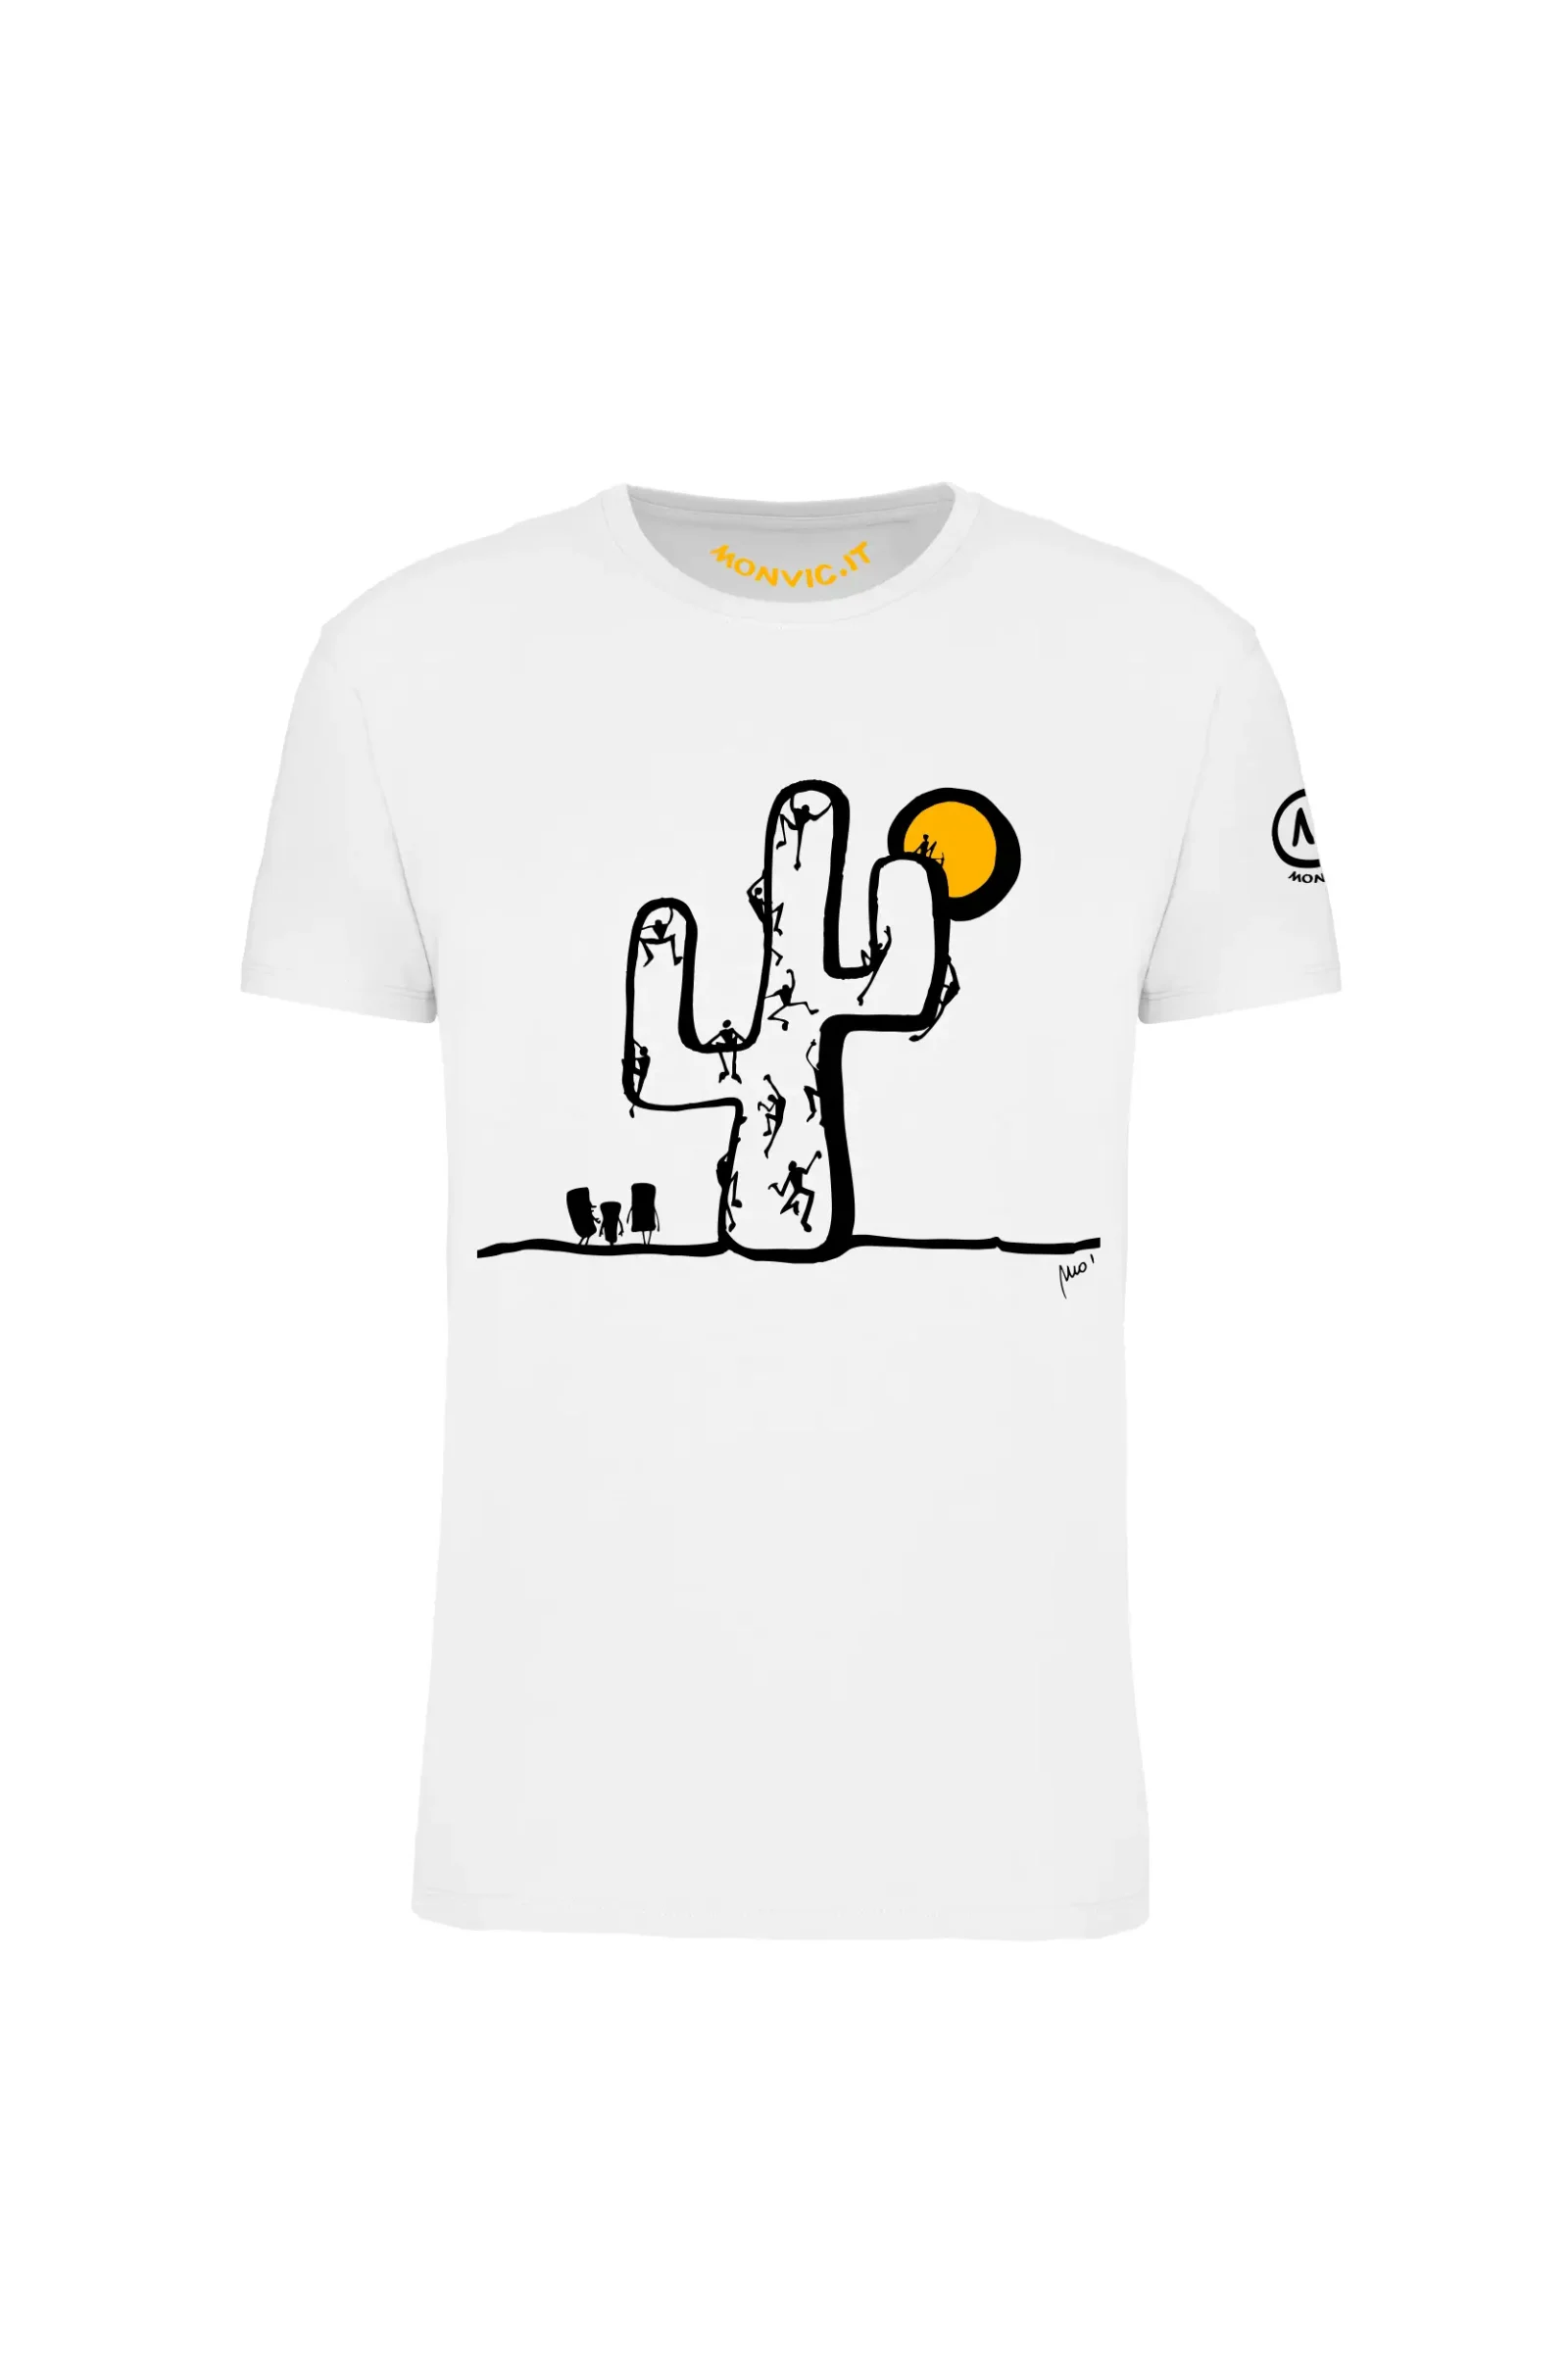 T-shirt arrampicata uomo - cotone organico bianco - "Cactus" - HASH ORGANIC MONVIC